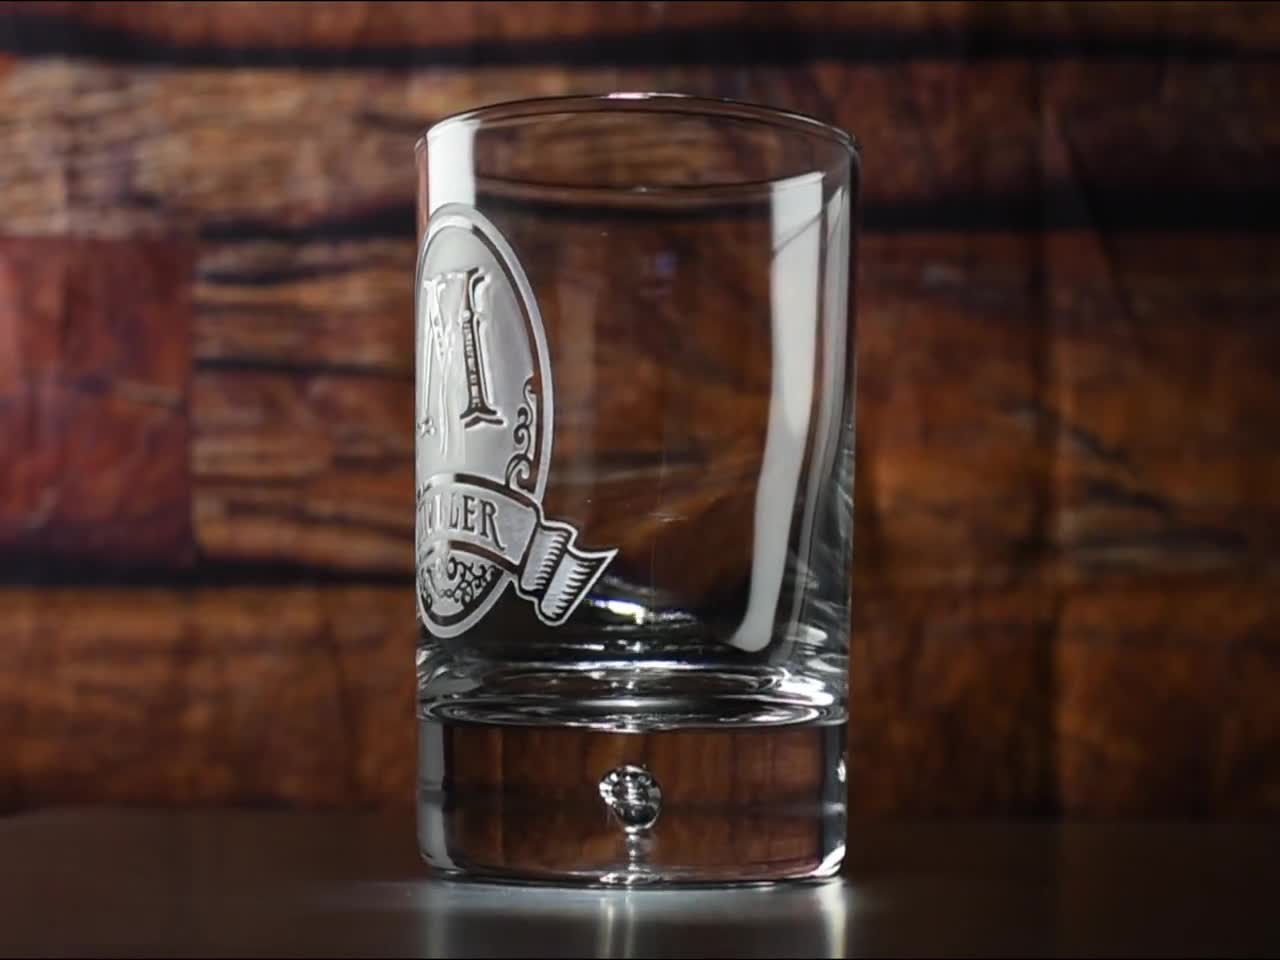 Dragon Glassware Upside Down Beer Glasses - Set of 2